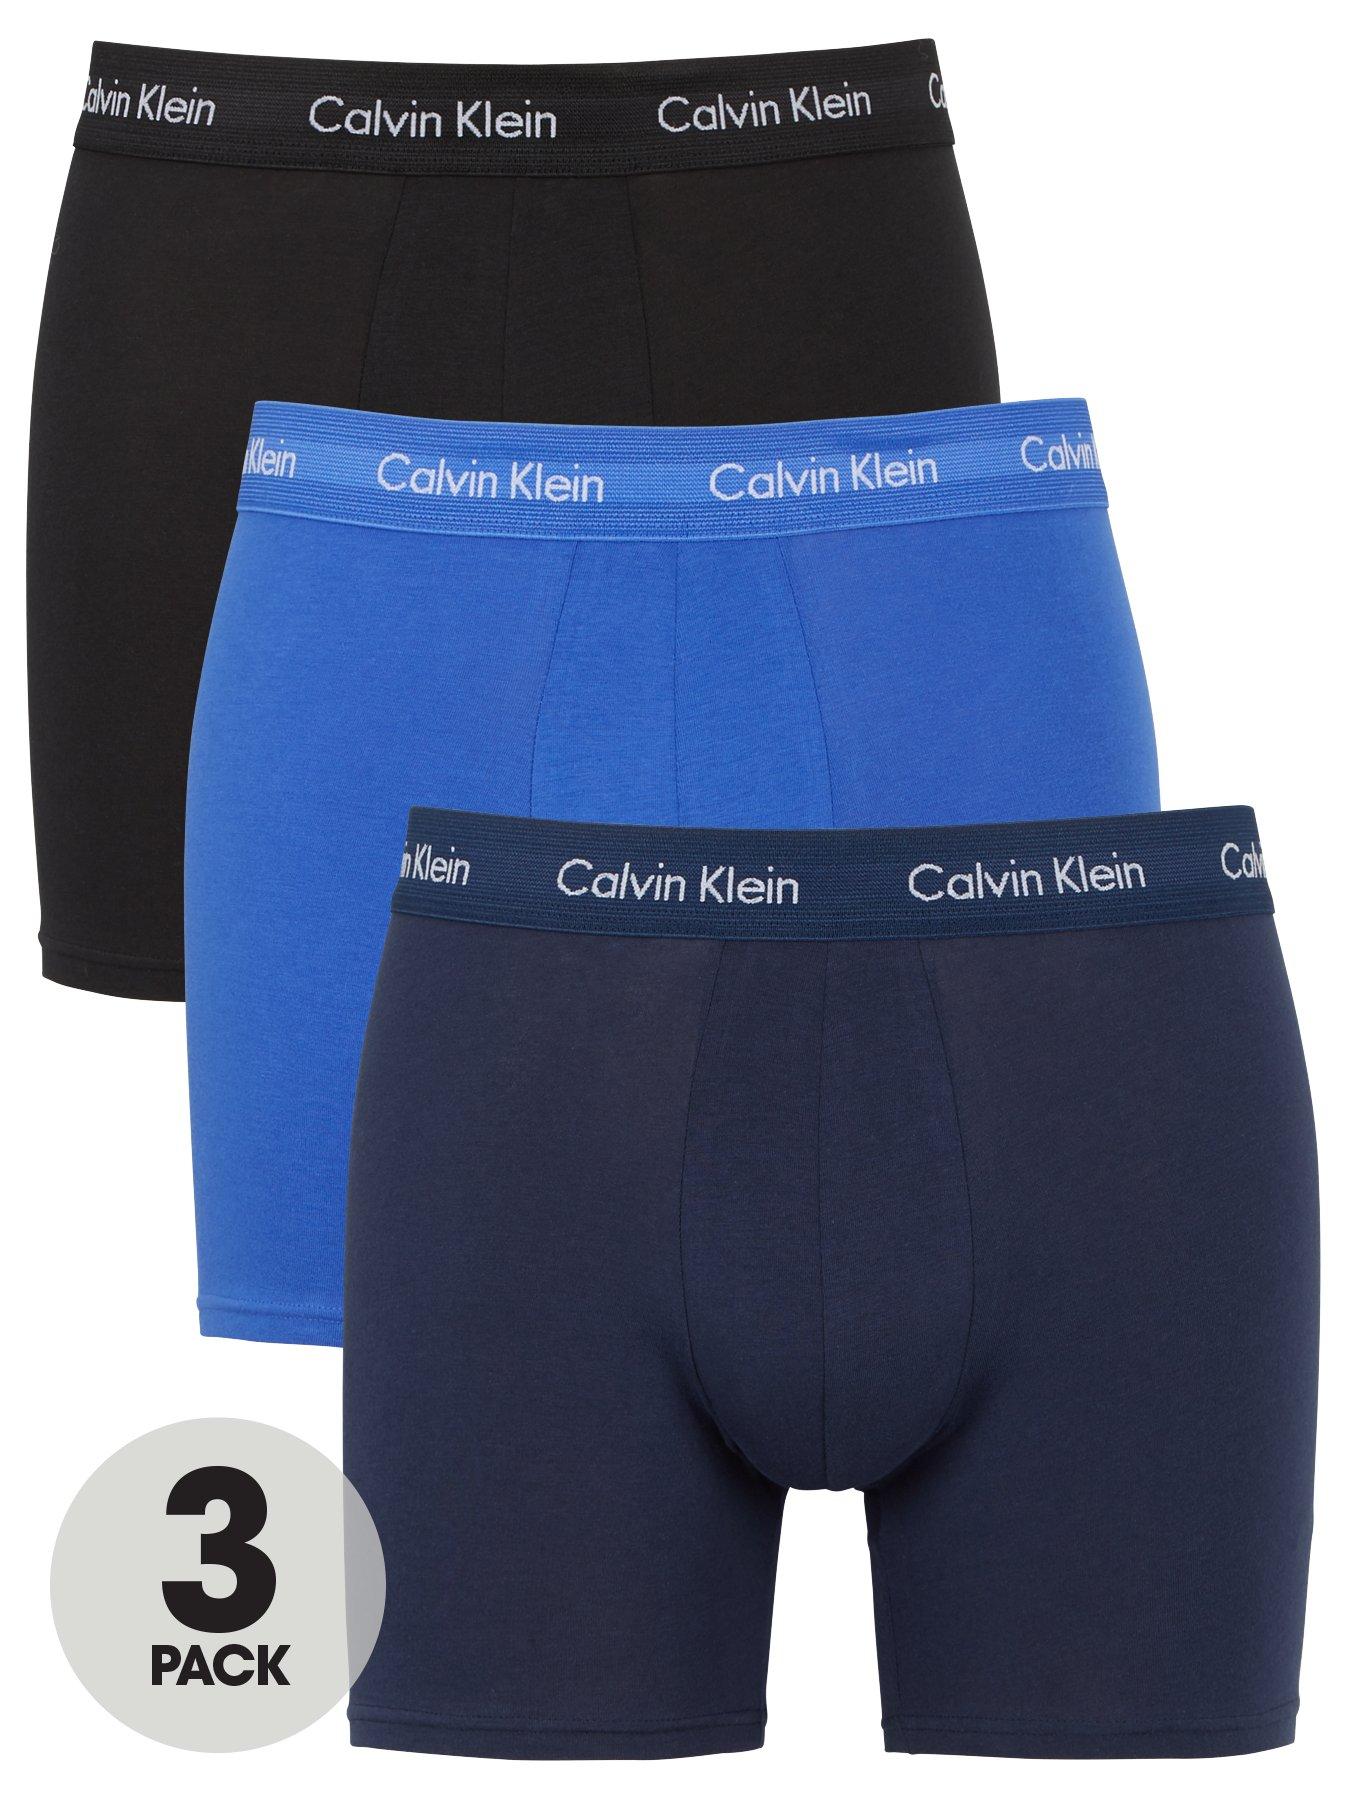 Lacoste Mens Boxer Briefs Casual Classic 3 Pack Cotton Stretch NAVY BLUE  M,L,XL